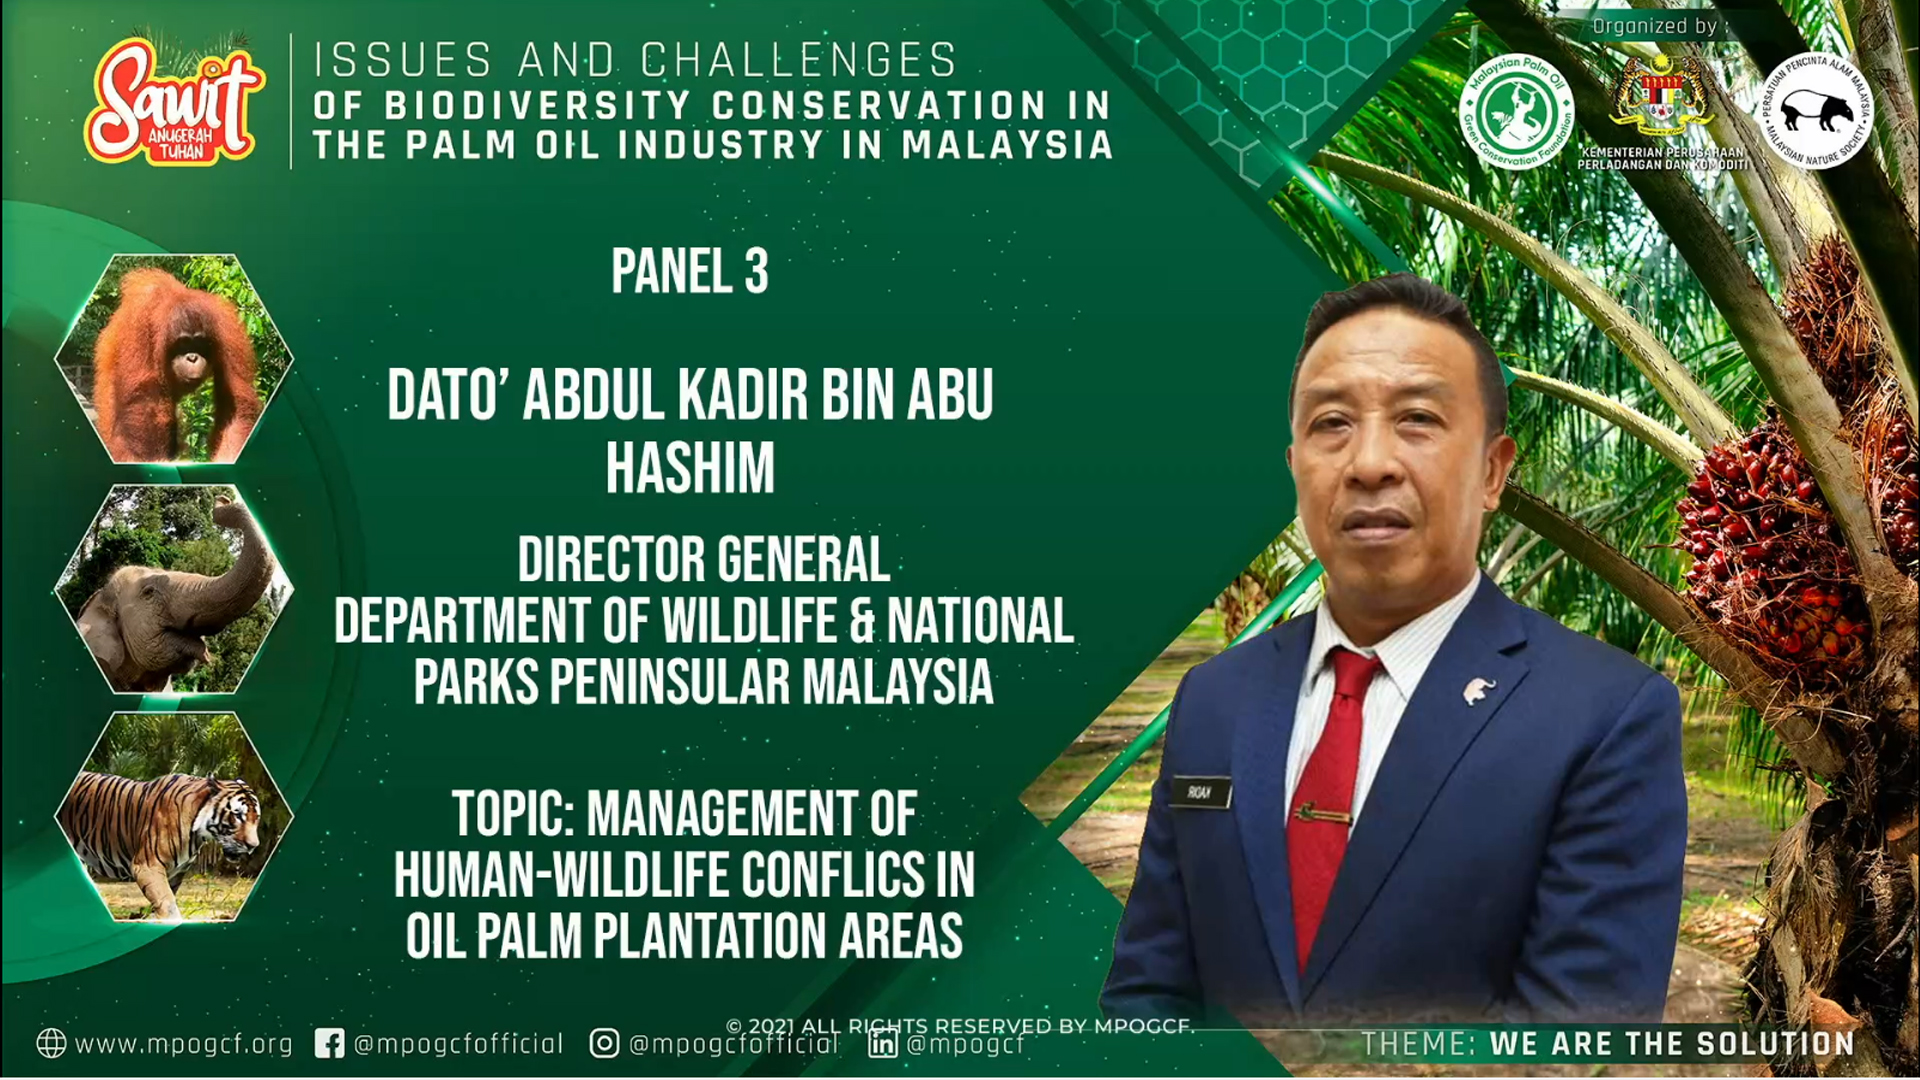 Management of Human Wildlife Conflict in Oil Palm Plantation Areas by Dato’ Abdul Kadir bin Abu Hashim